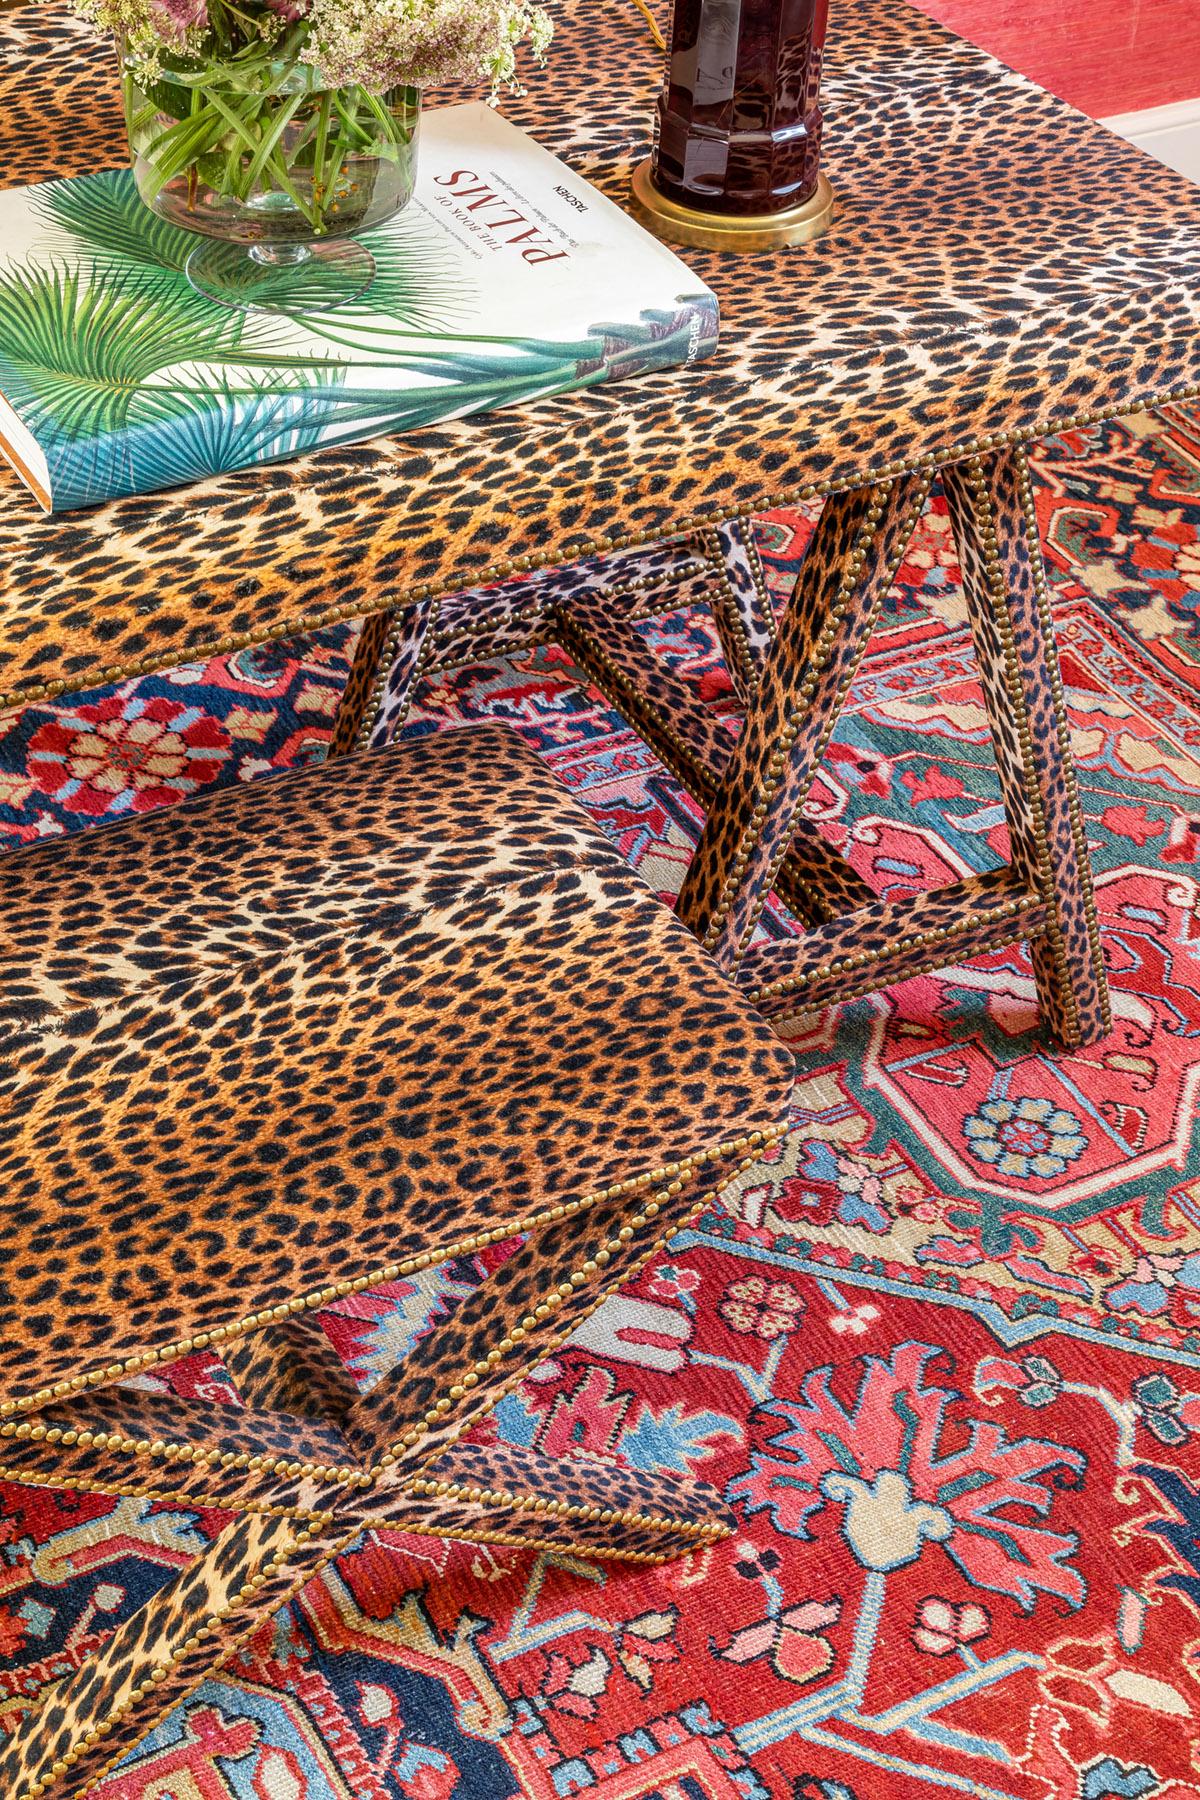 French Provincial The 1940's inspired Matilda Trestle Table in Leopard Velvet For Sale